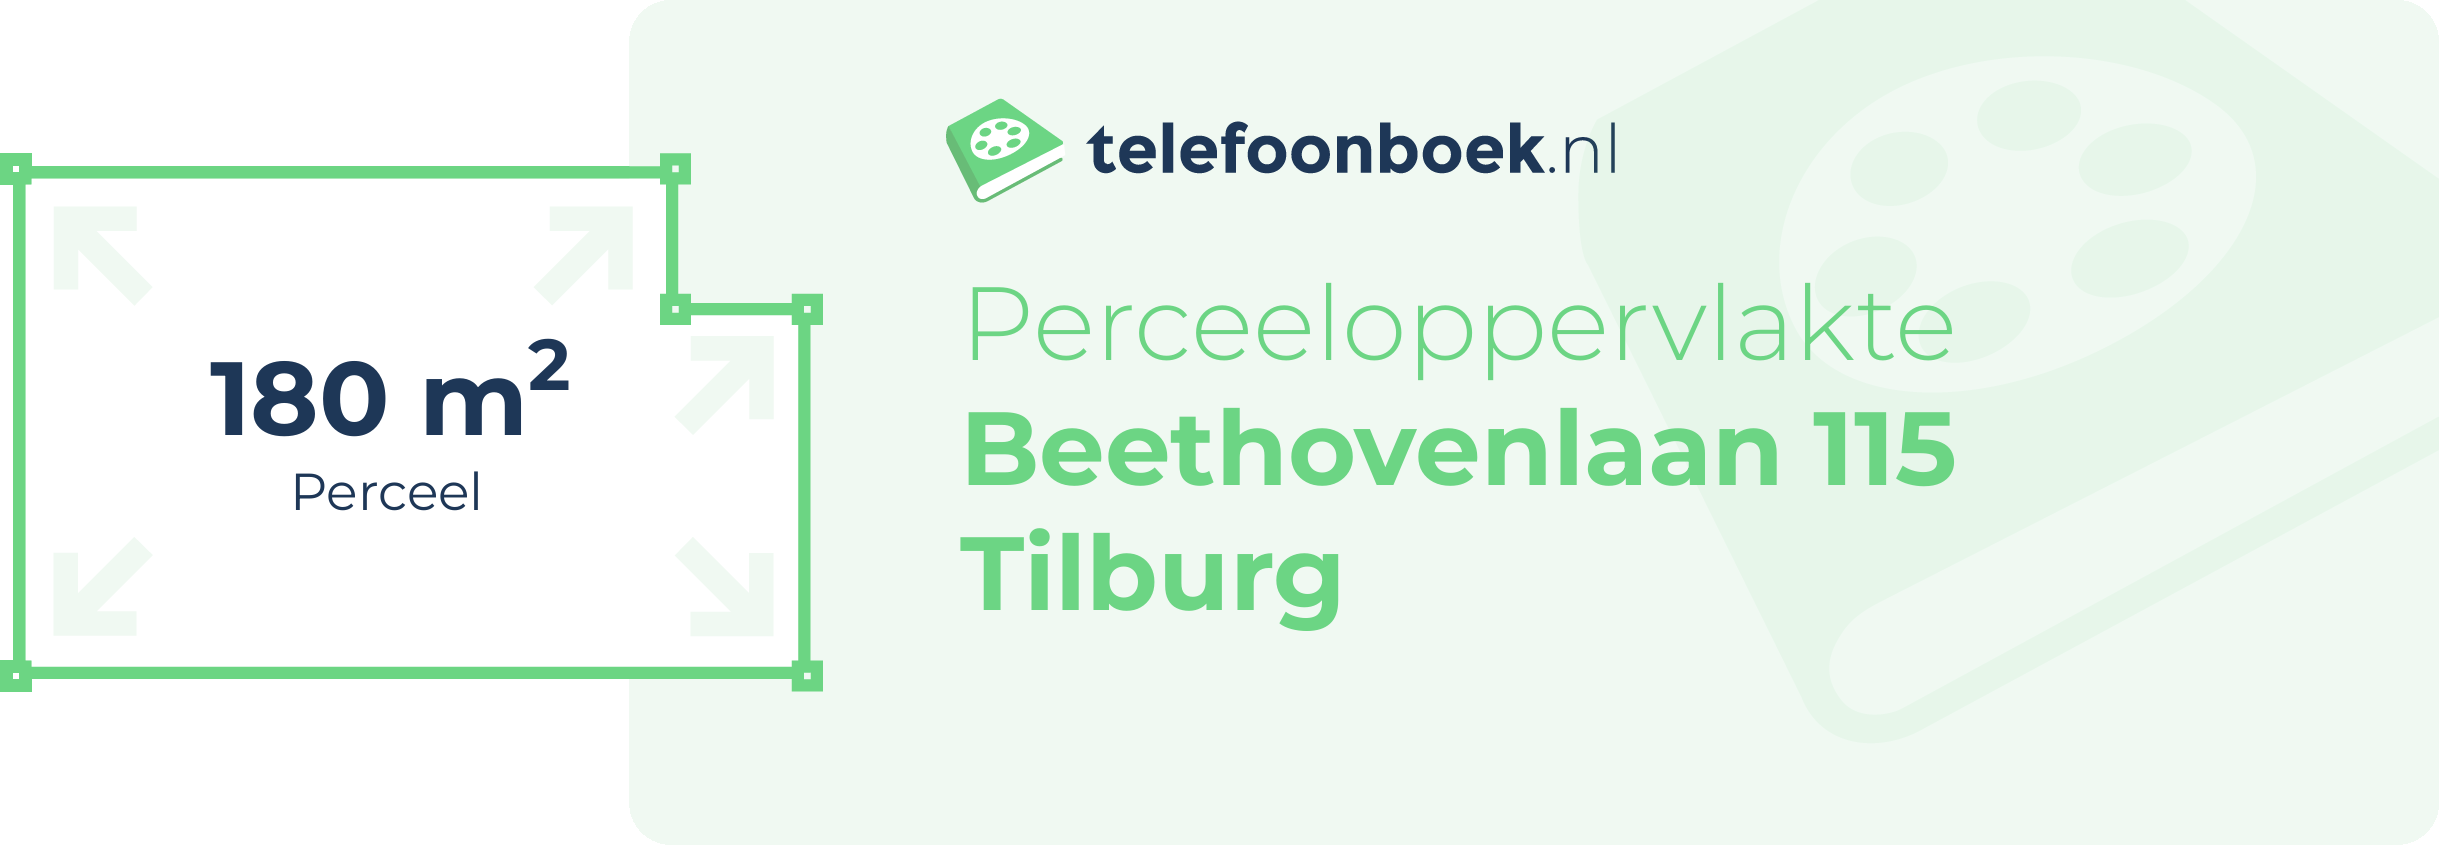 Perceeloppervlakte Beethovenlaan 115 Tilburg